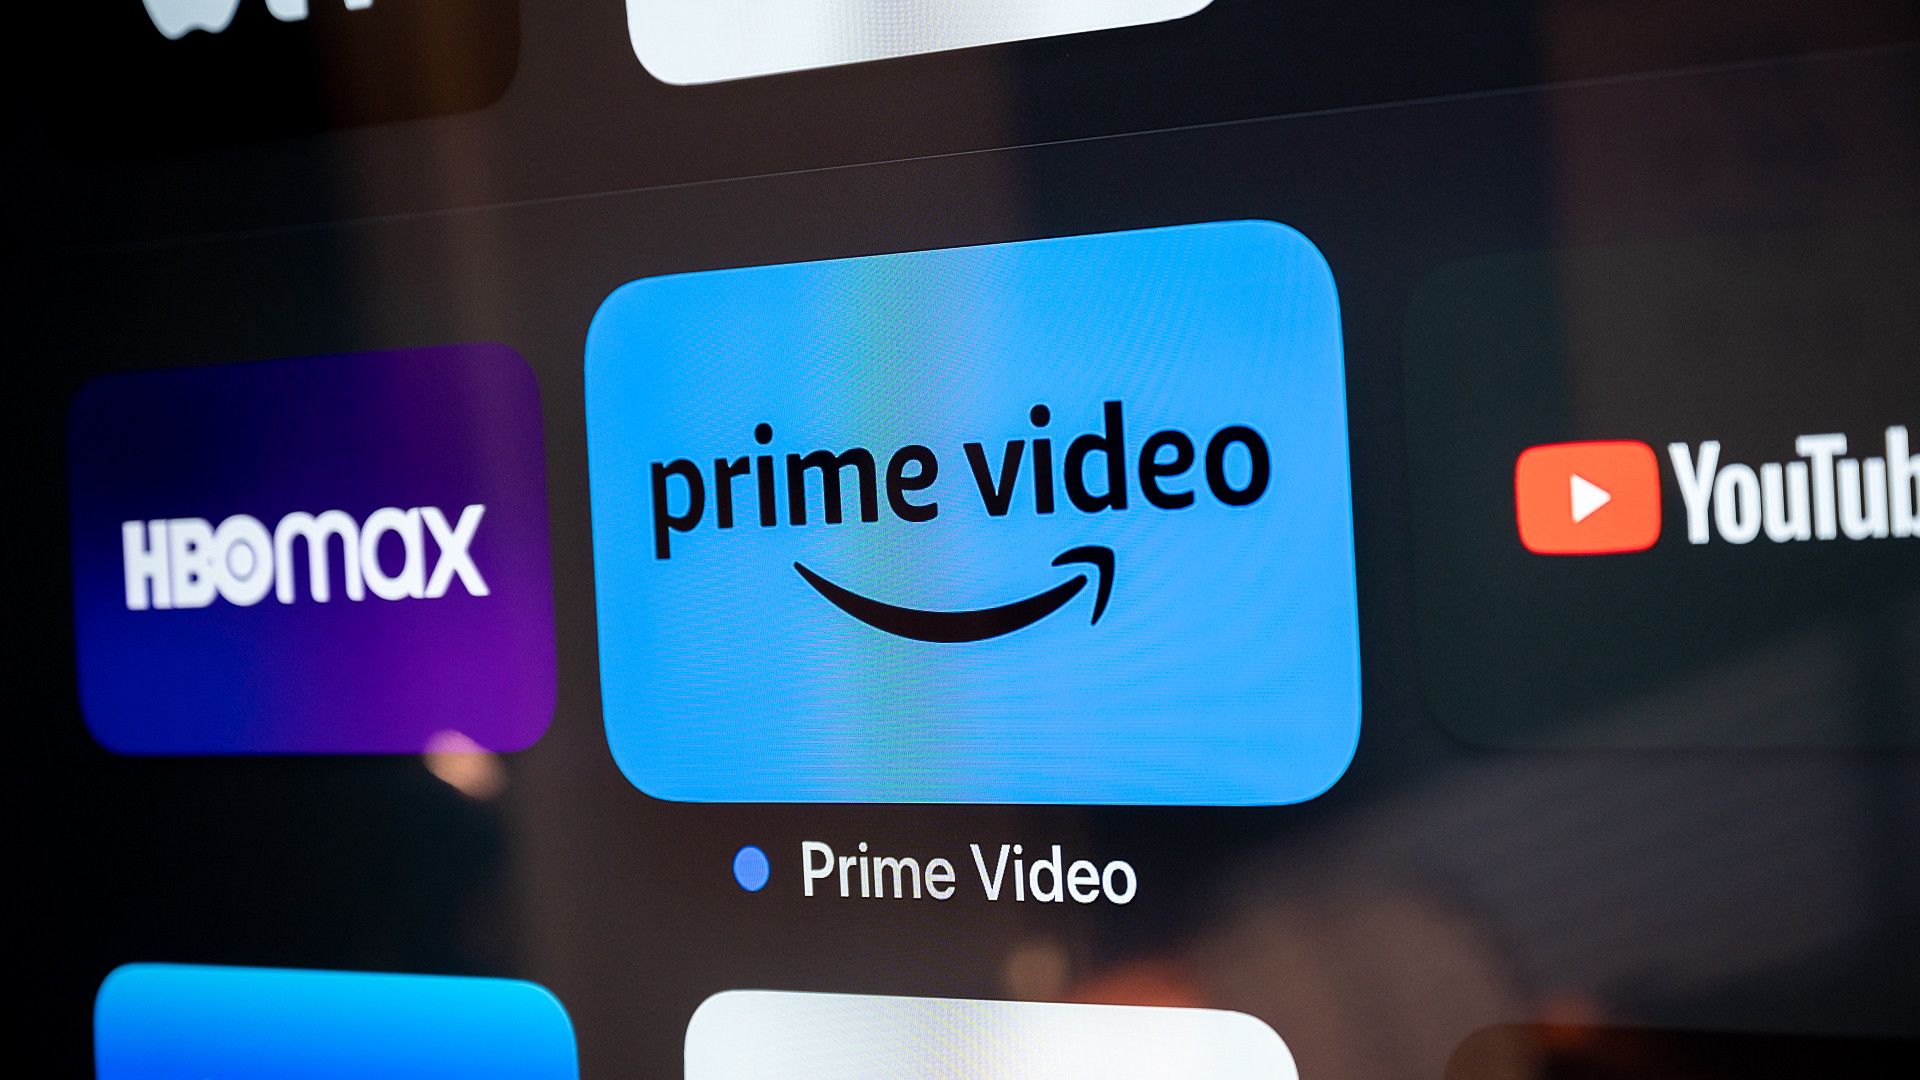 Amazon Prime Video app icon on an Apple TV